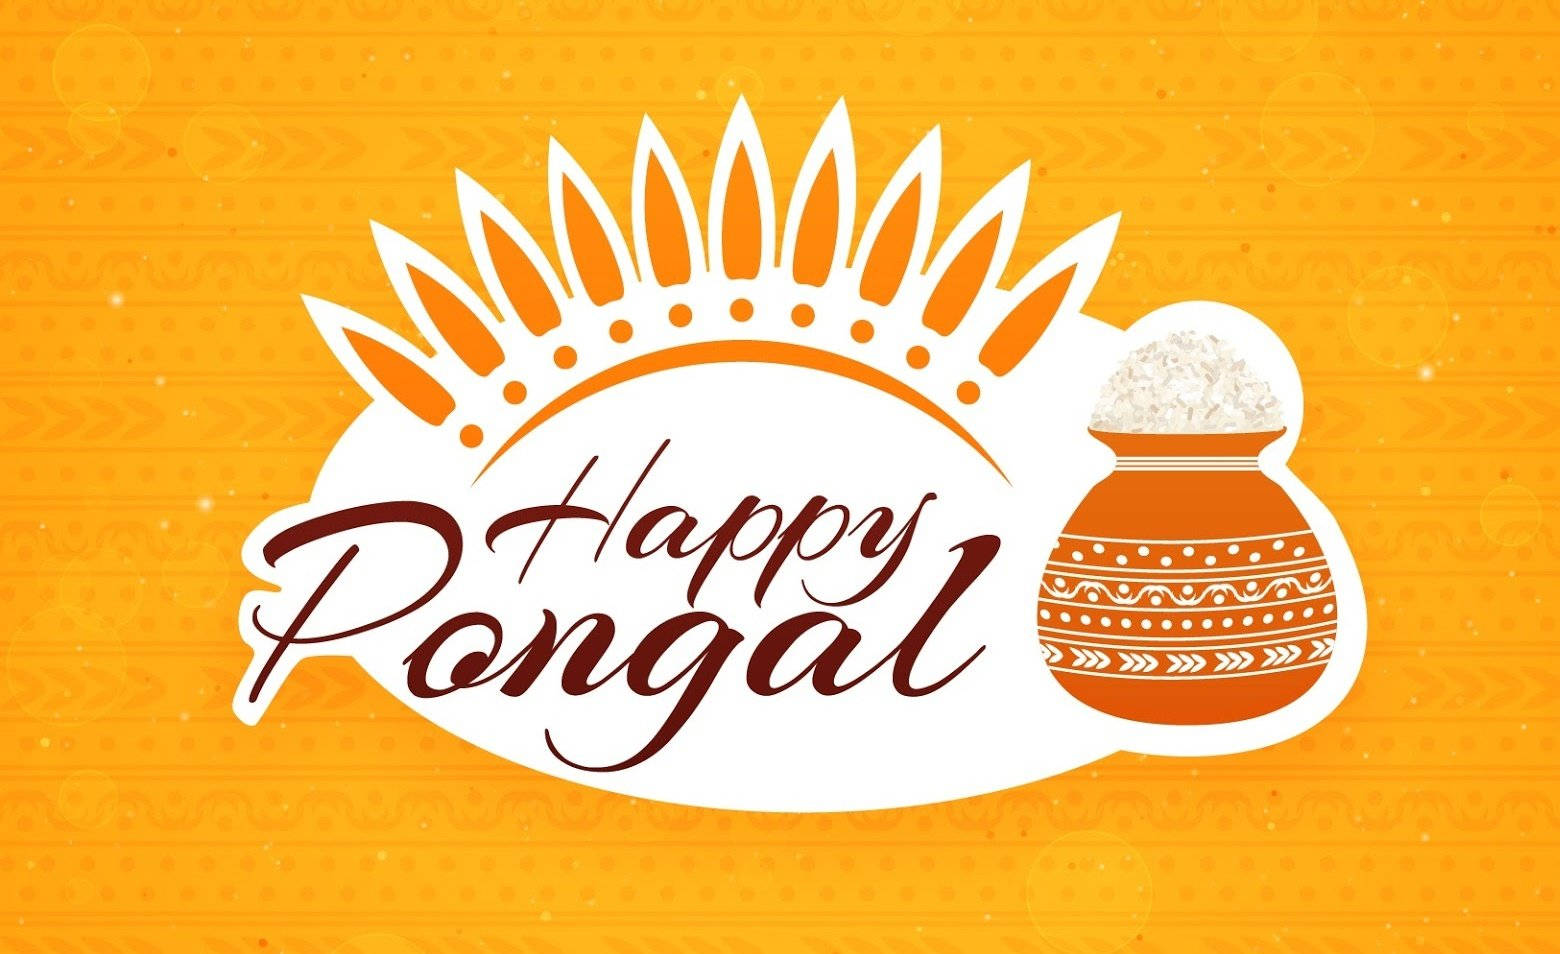 Happy Pongal Orange Greeting Card